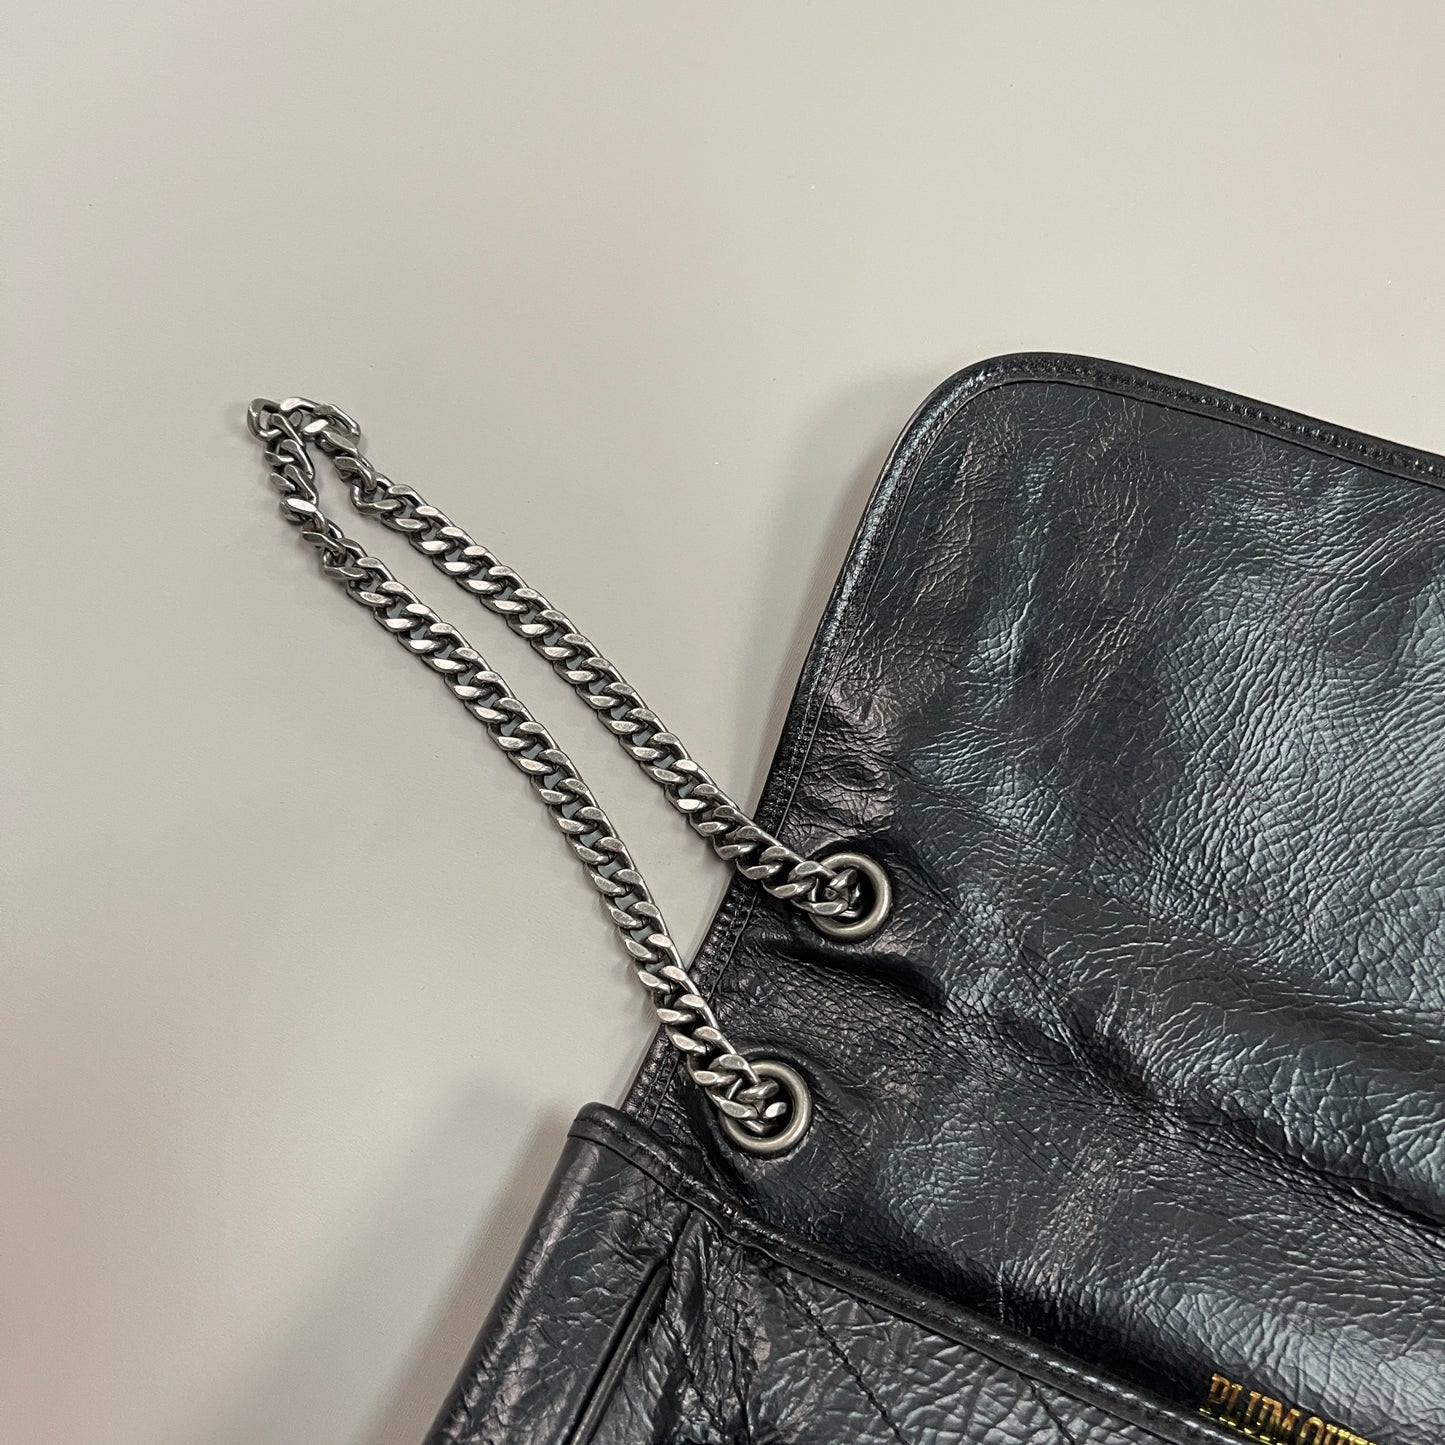 PLUM QUEEN Classic Genuine Leather Handbag Women's Sz L Black (New)